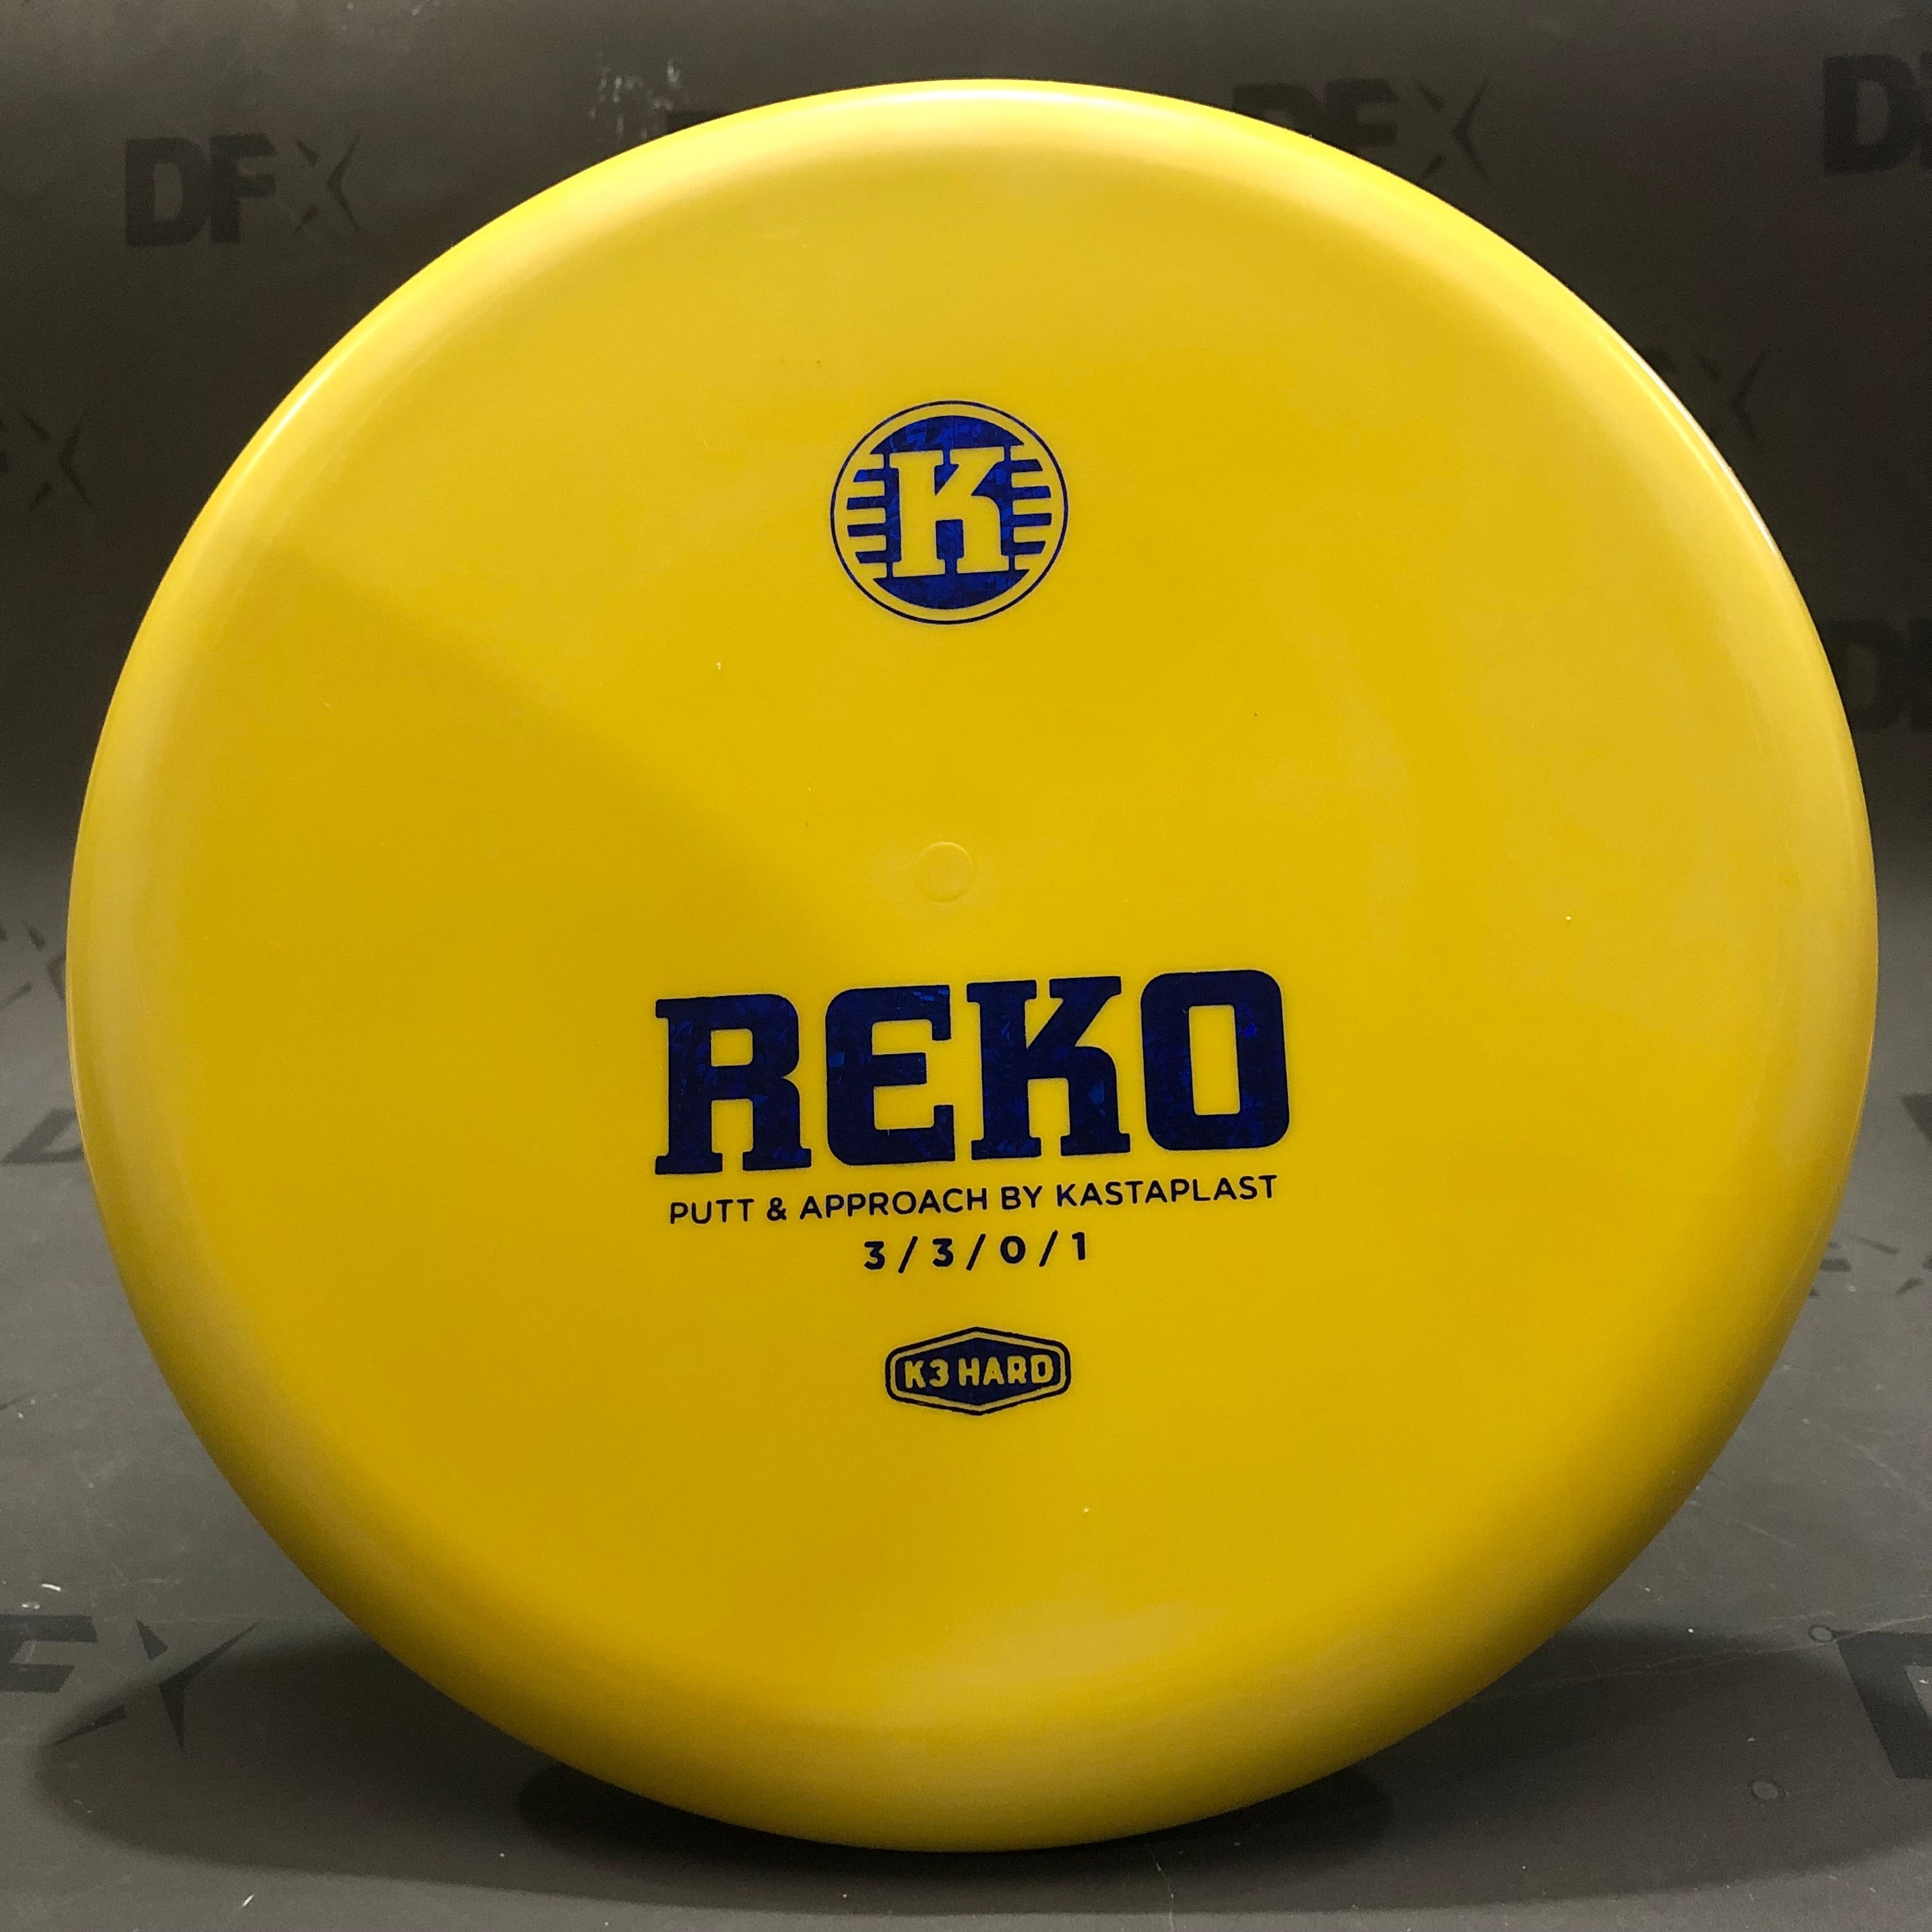 Kastaplast Reko - K3 Hard